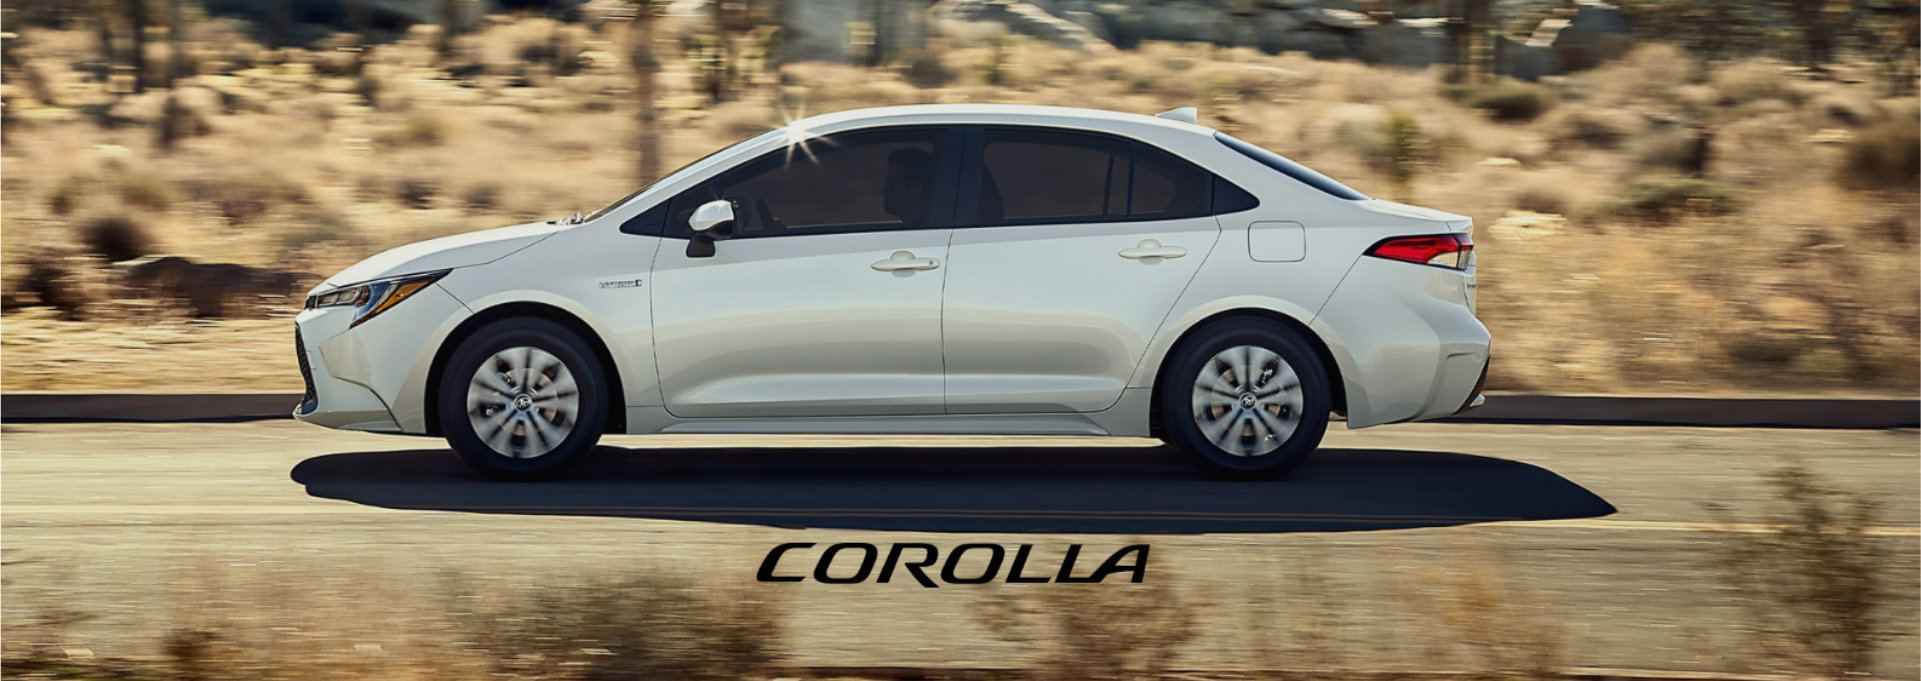 Corolla 2020 slide